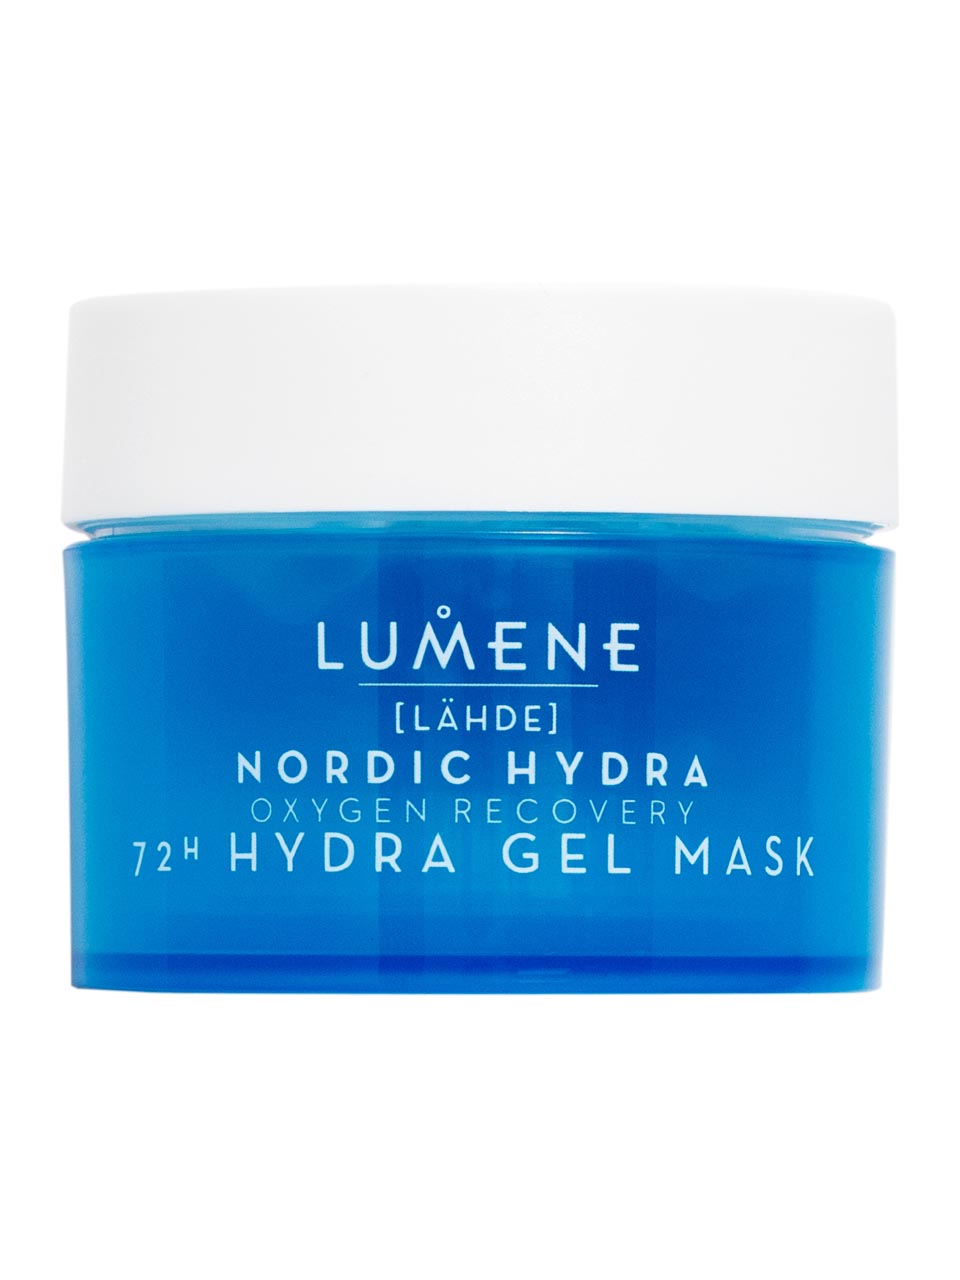 Lumene Nordic Hydra [Lähde] Oxygen Recovery 72h Hydra Gel Mask 15 ml null - onesize - 1